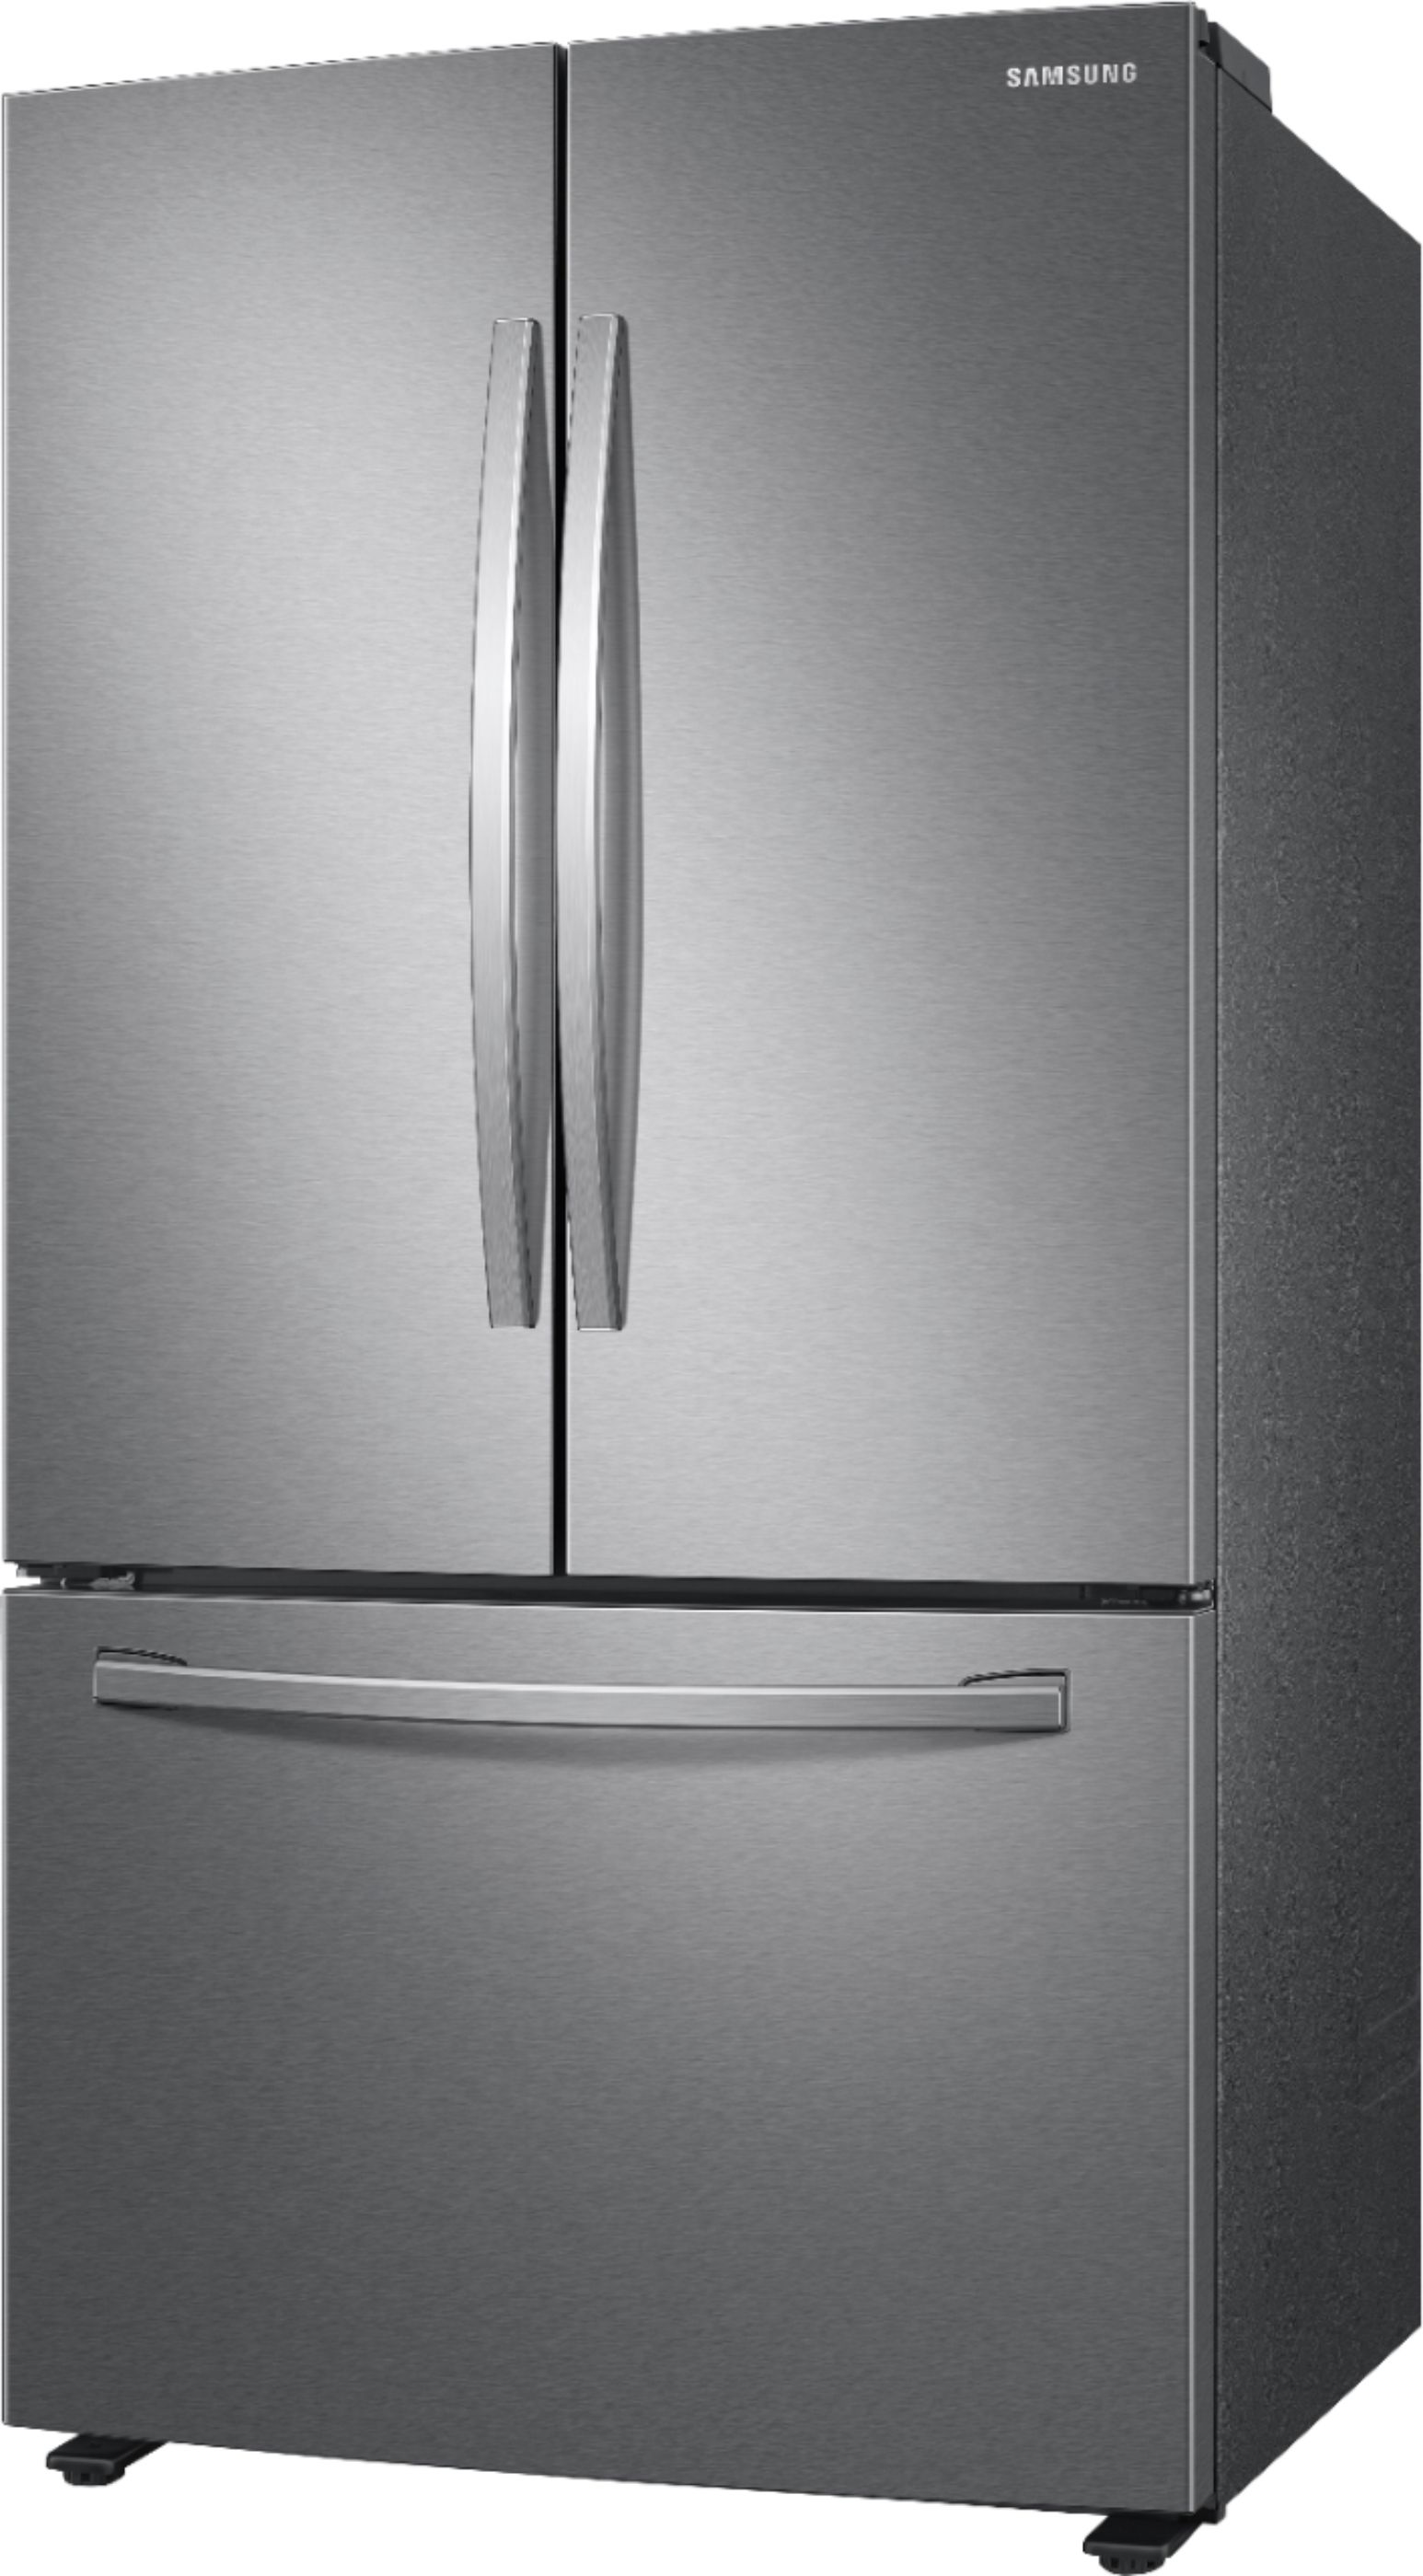 Left View: Samsung - 28 cu. ft. 3-Door French Door Refrigerator with Large Capacity - Stainless Steel